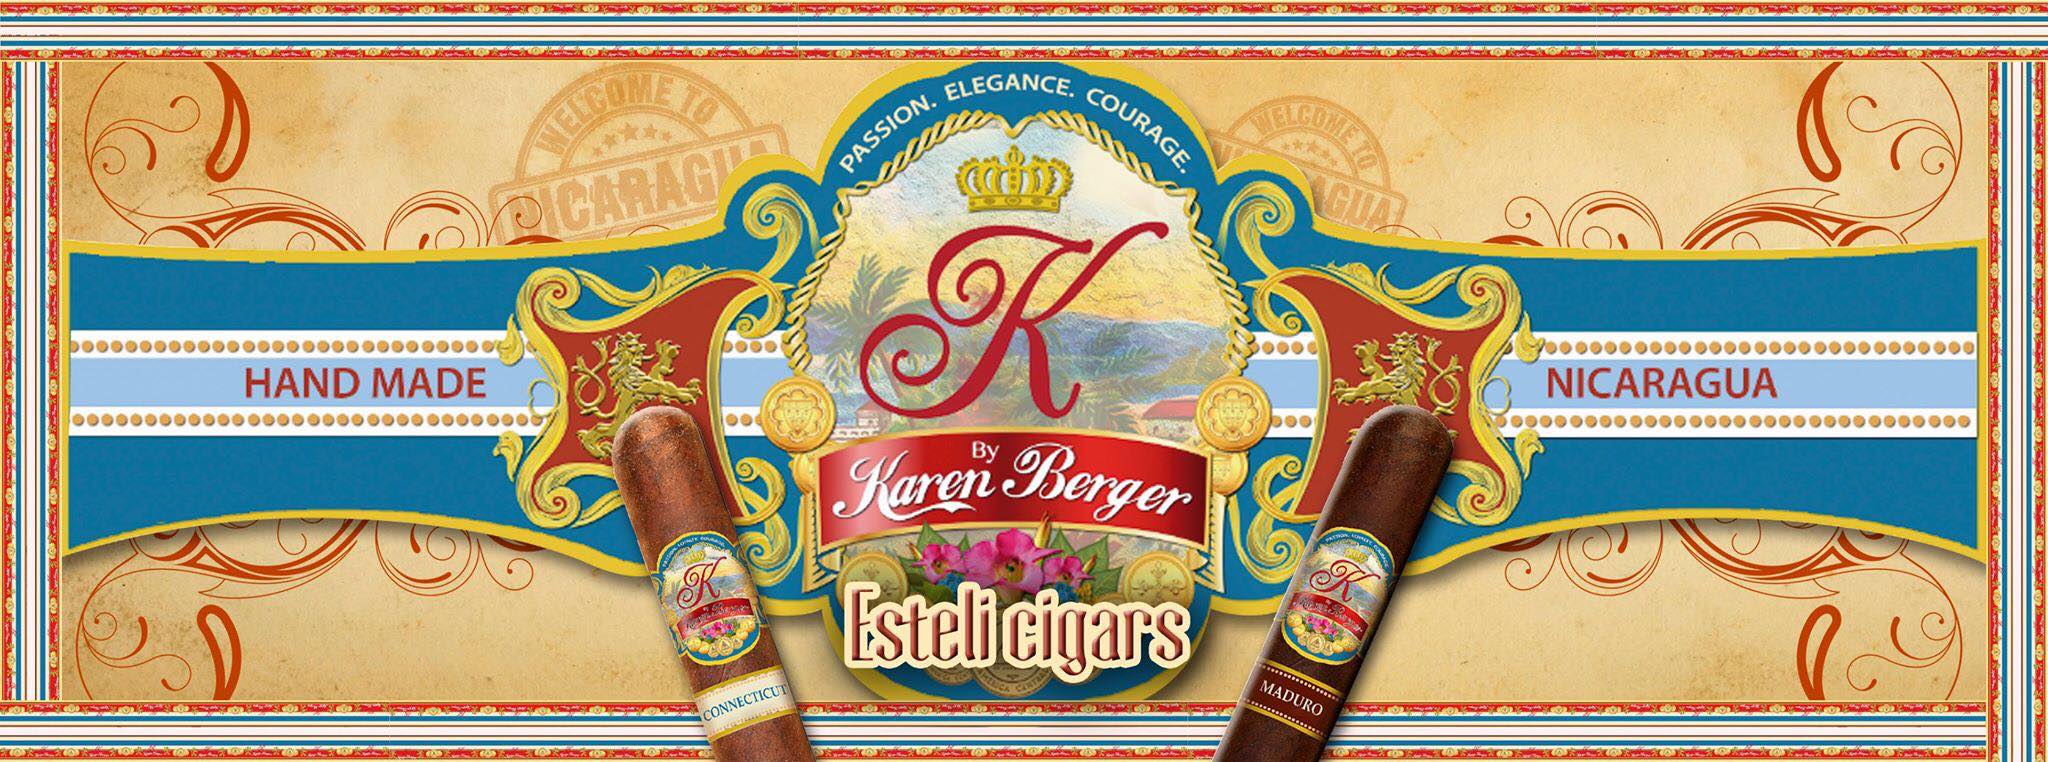 k by Karen Berger Cigars